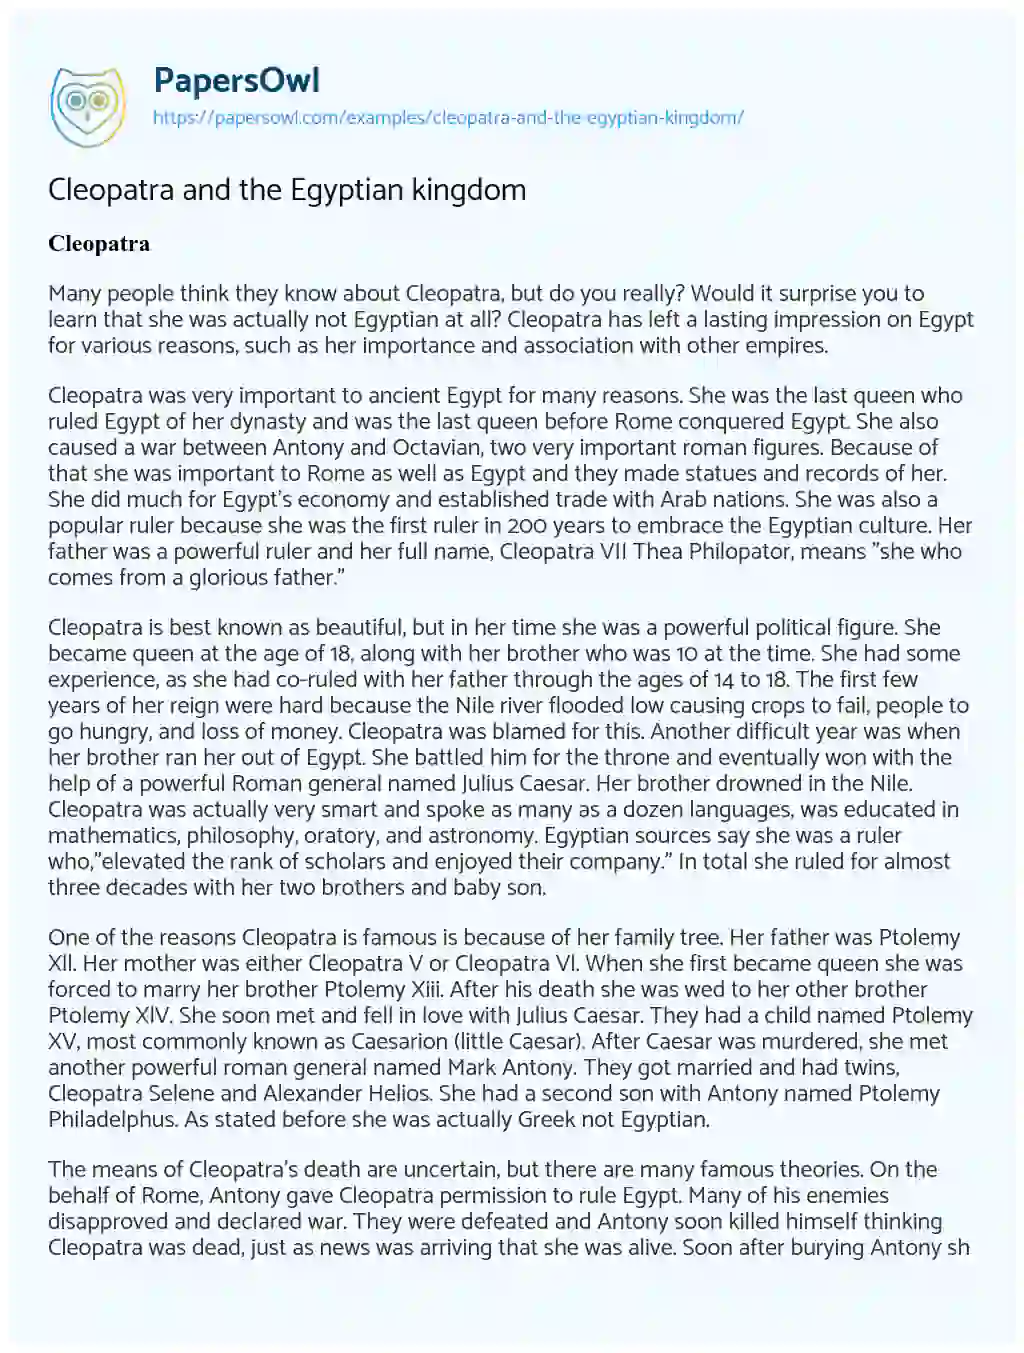 Essay on Cleopatra and the Egyptian Kingdom